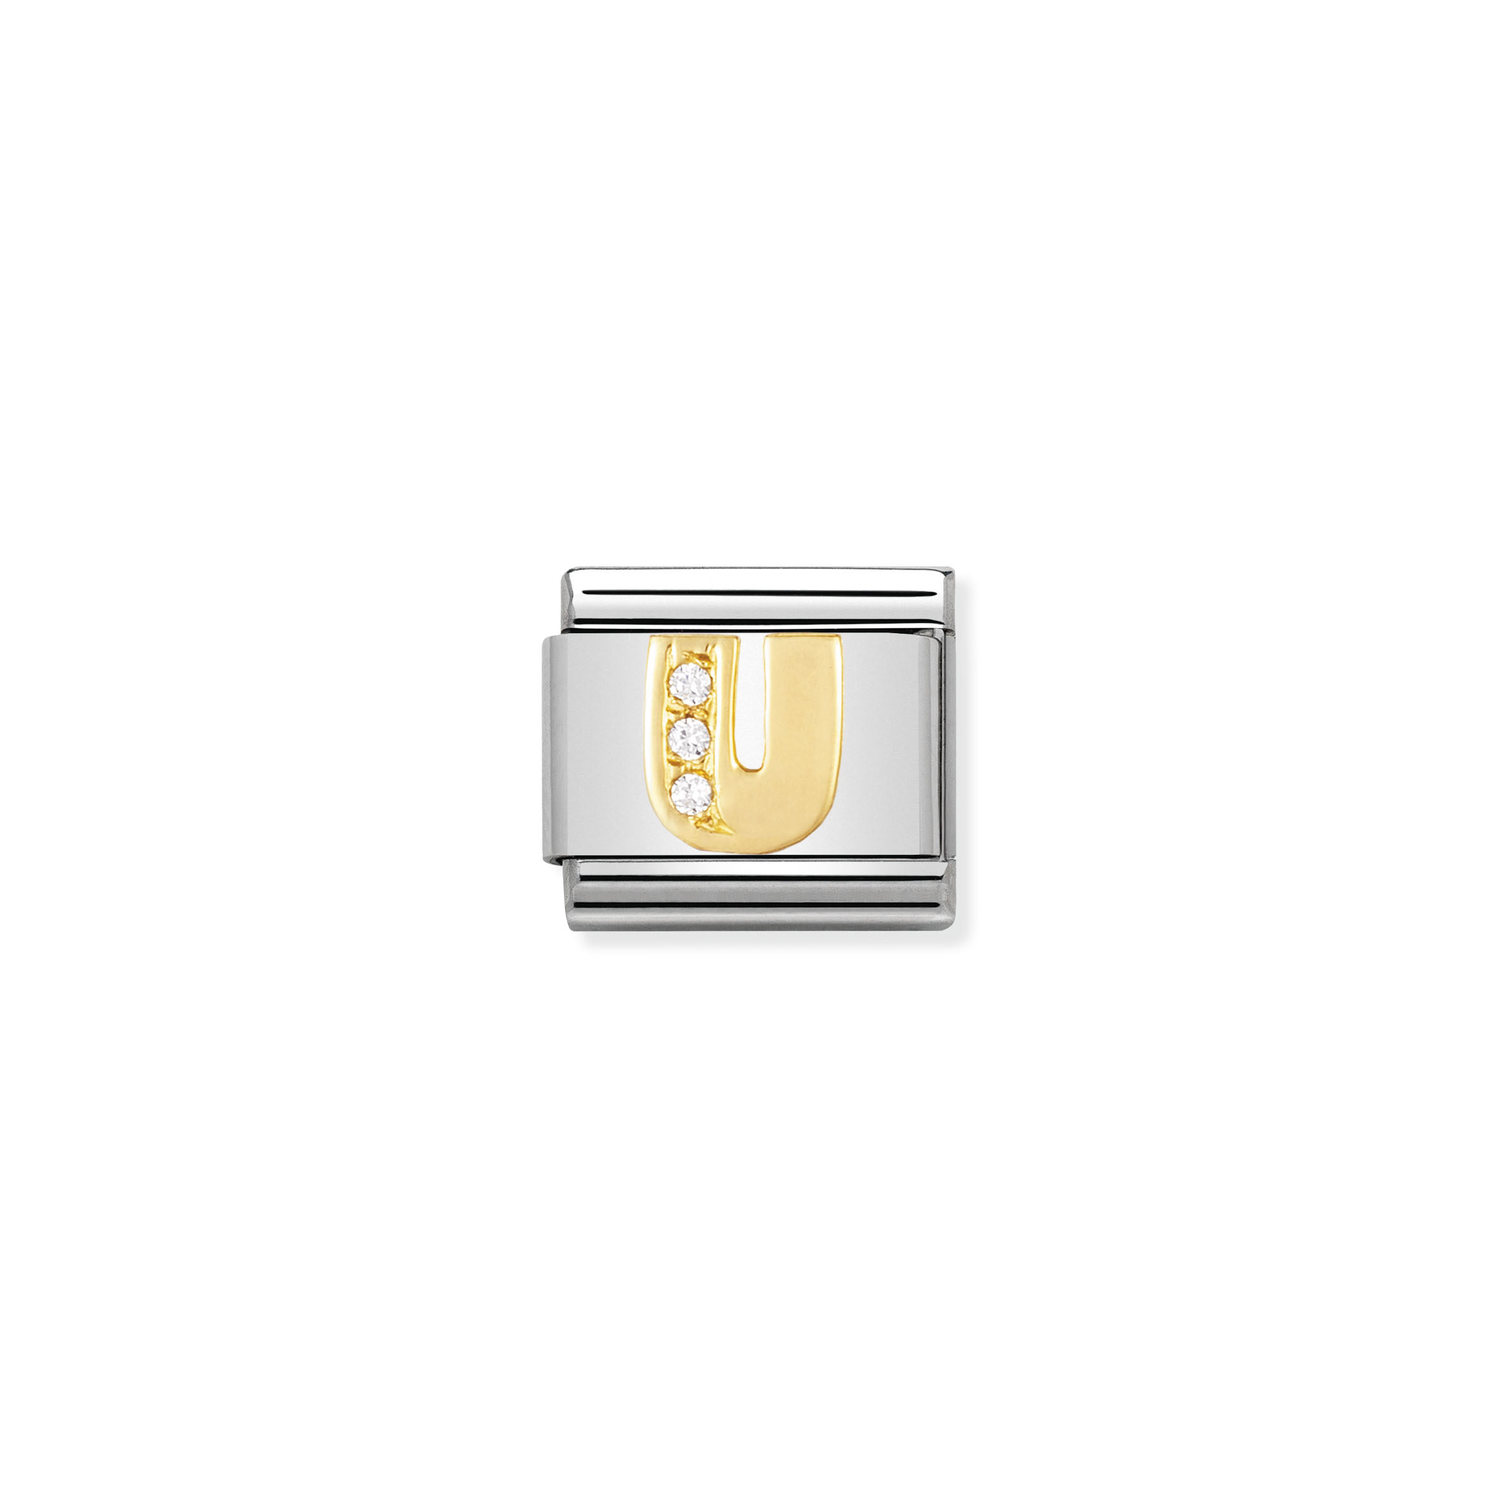 Ogniwo / link do bransolety Nomination Composable stalowe ze złotem 18k litera U (OG-001264) product